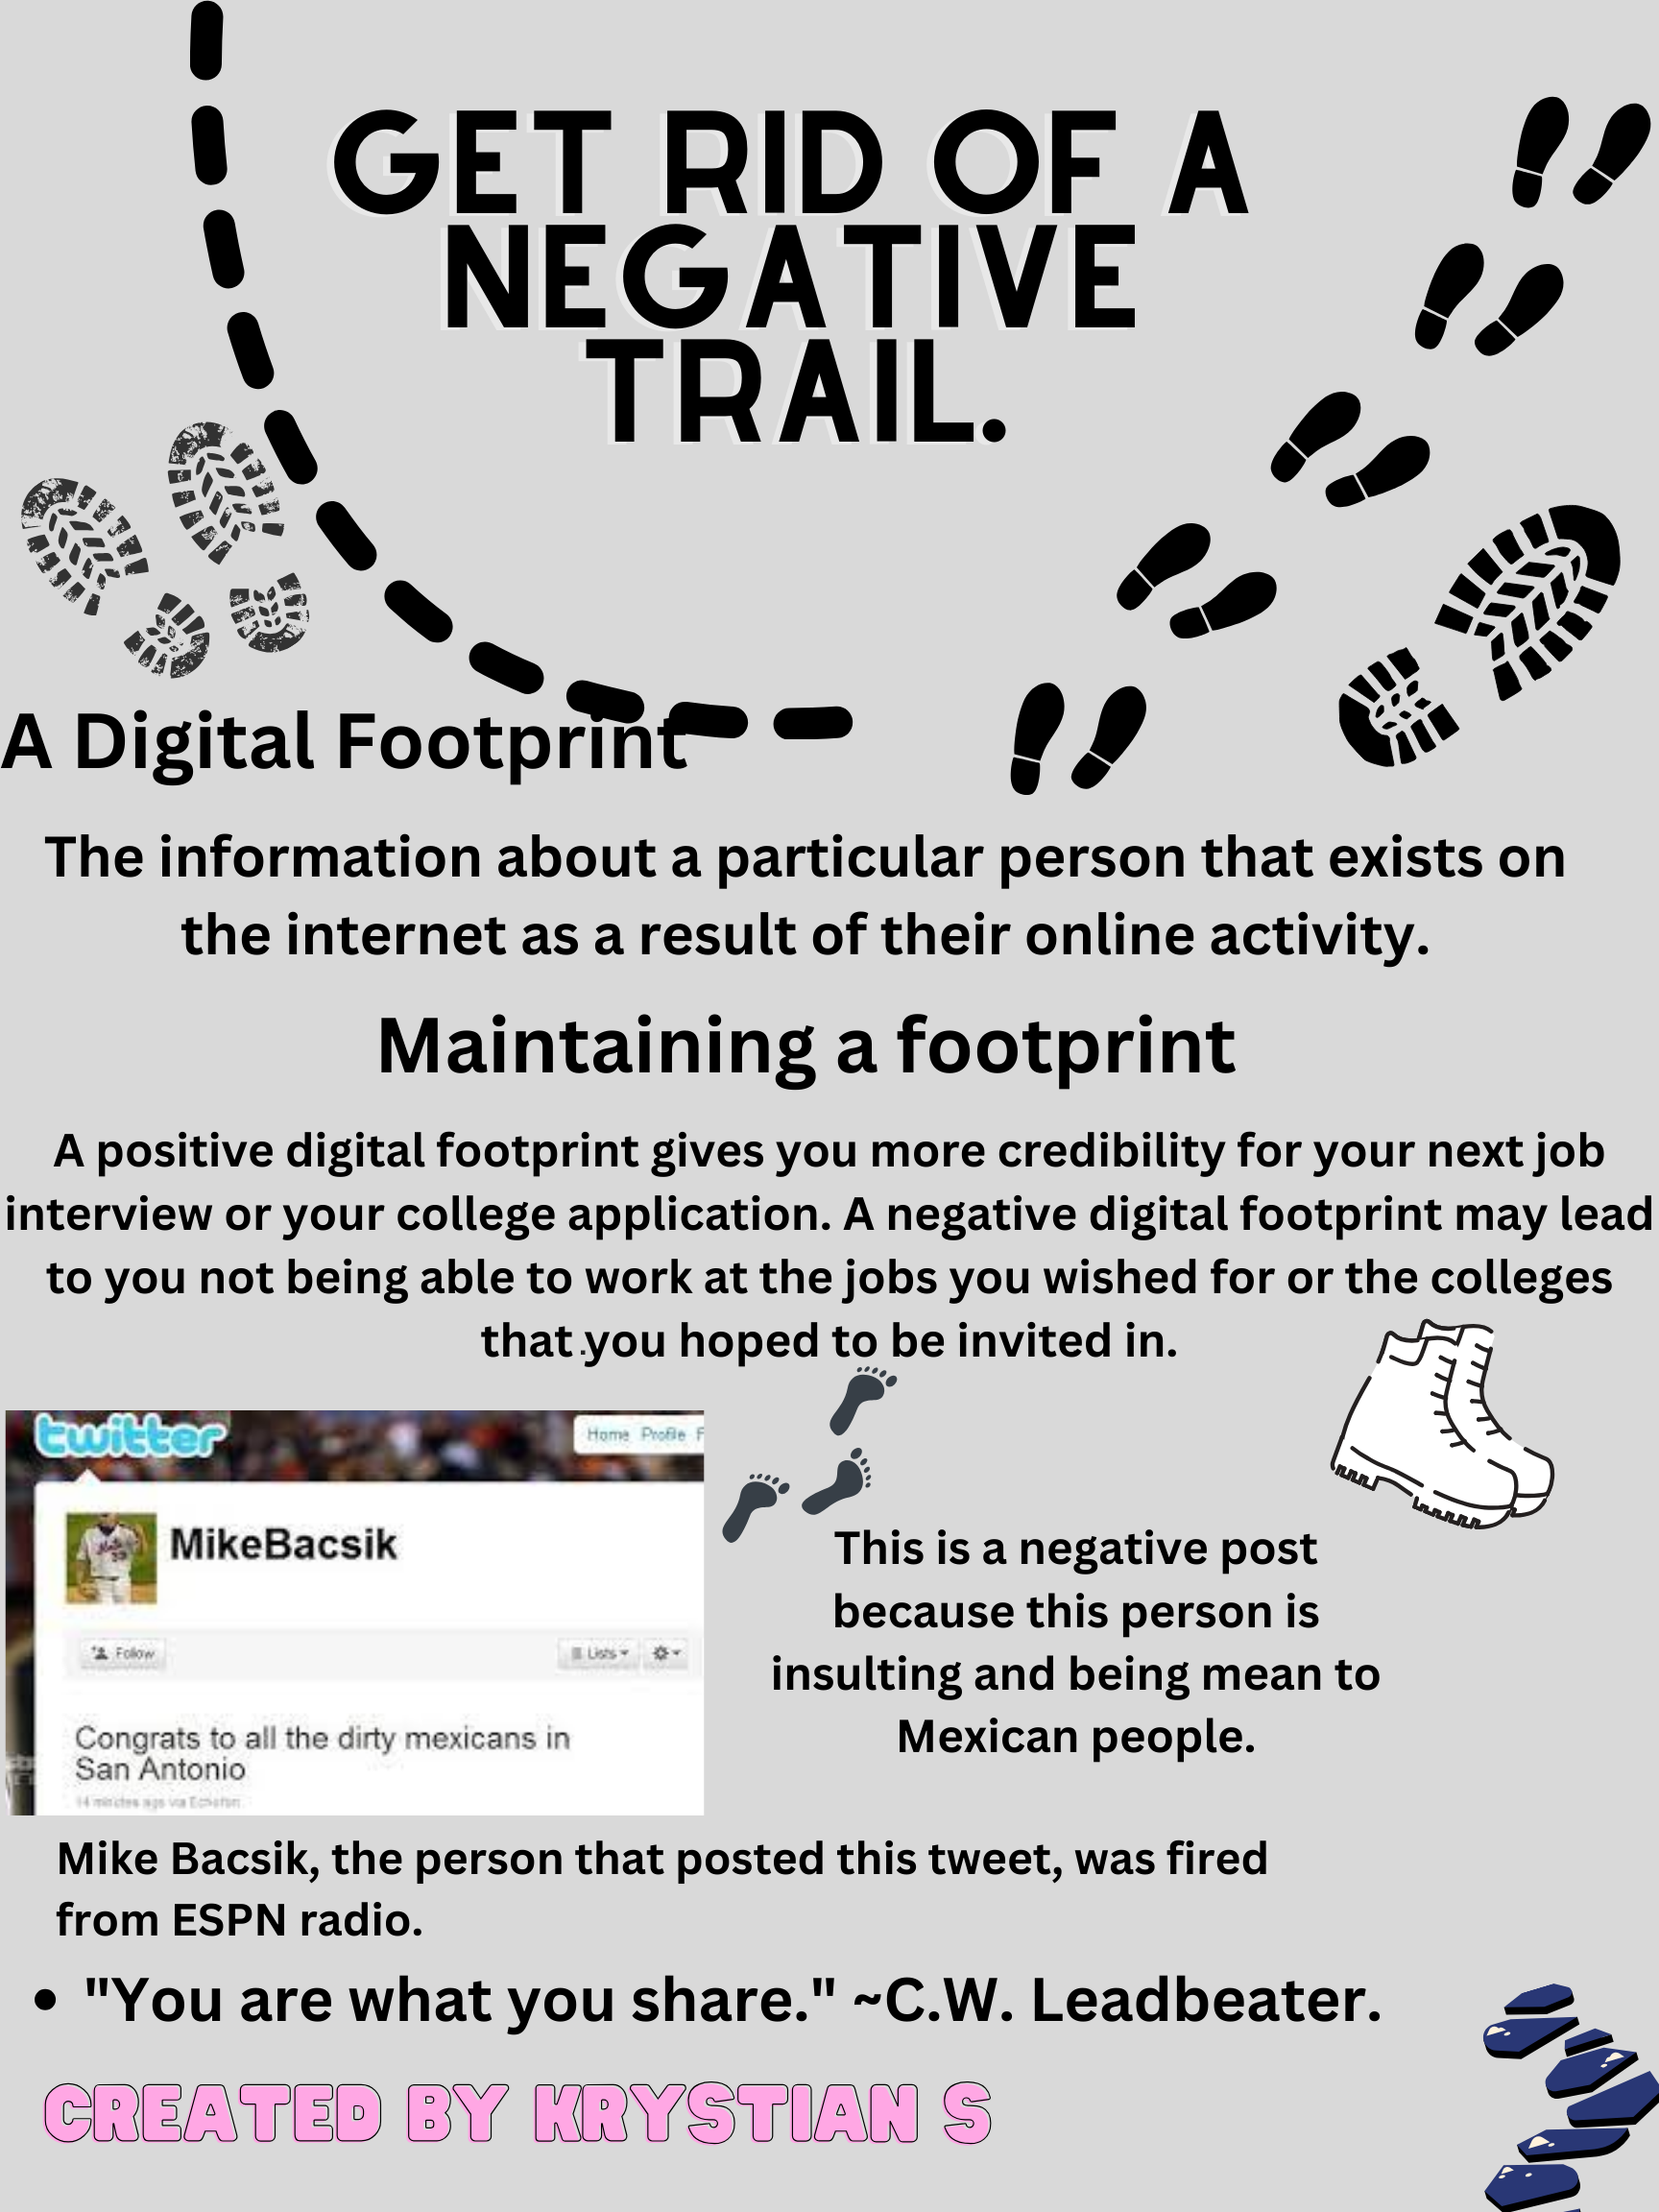 Digital Footprint Poster - Krystian S